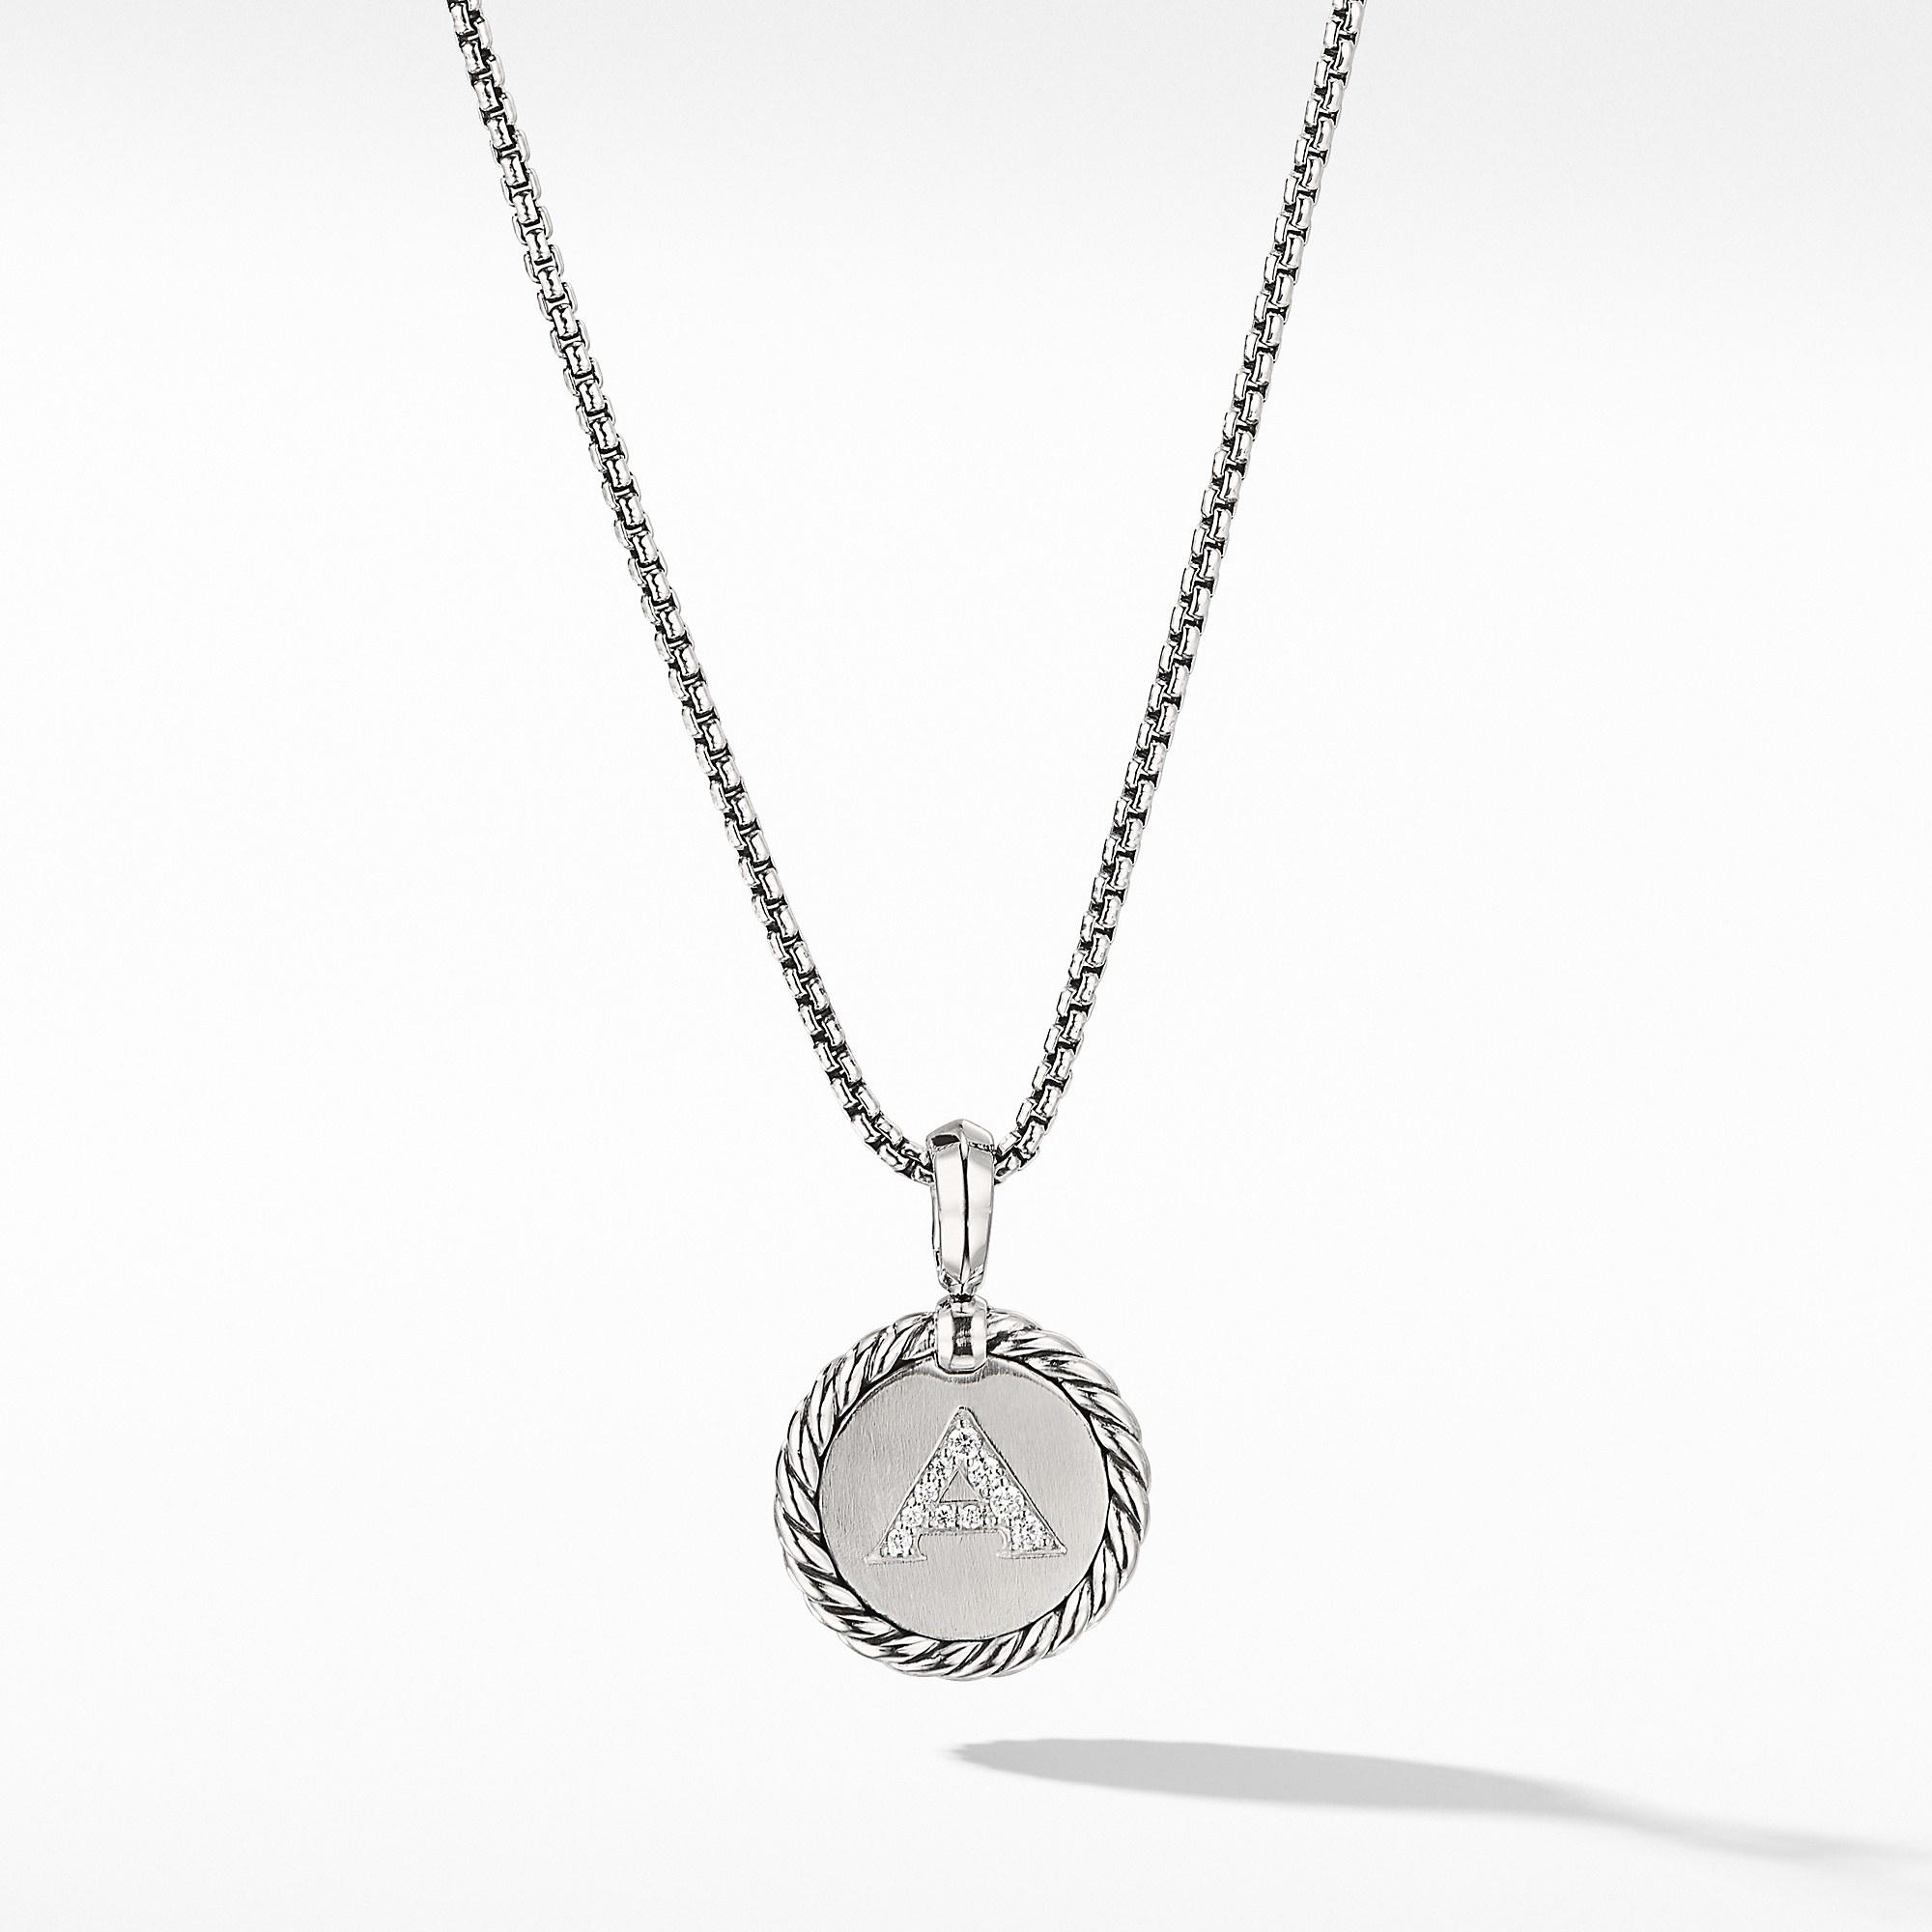 David Yurman A Initial Charm Necklace with Diamonds